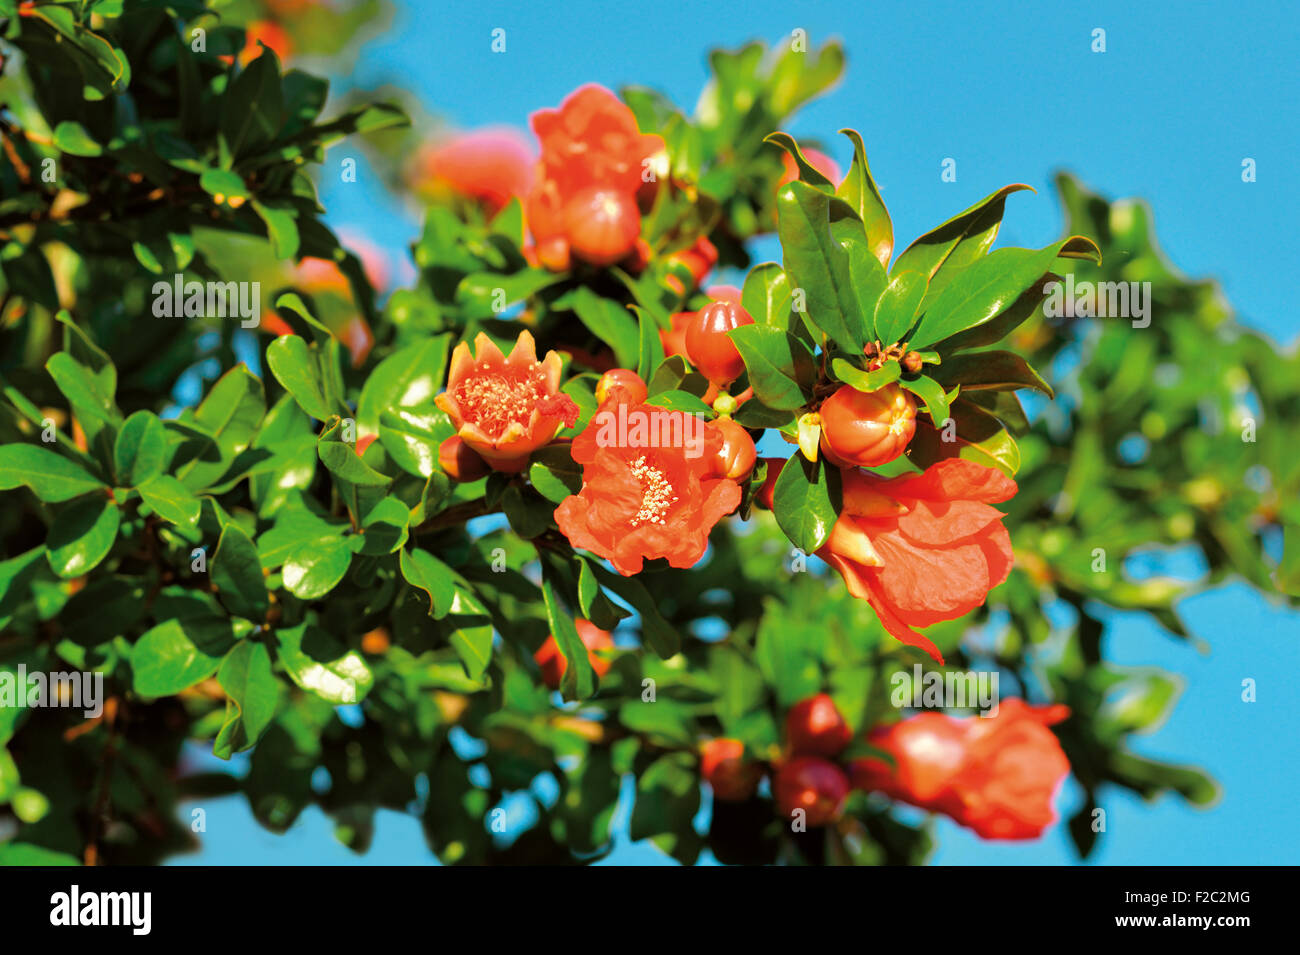 Portugal: Flowers of the Pomegranate tree (Punica granatum) Stock Photo